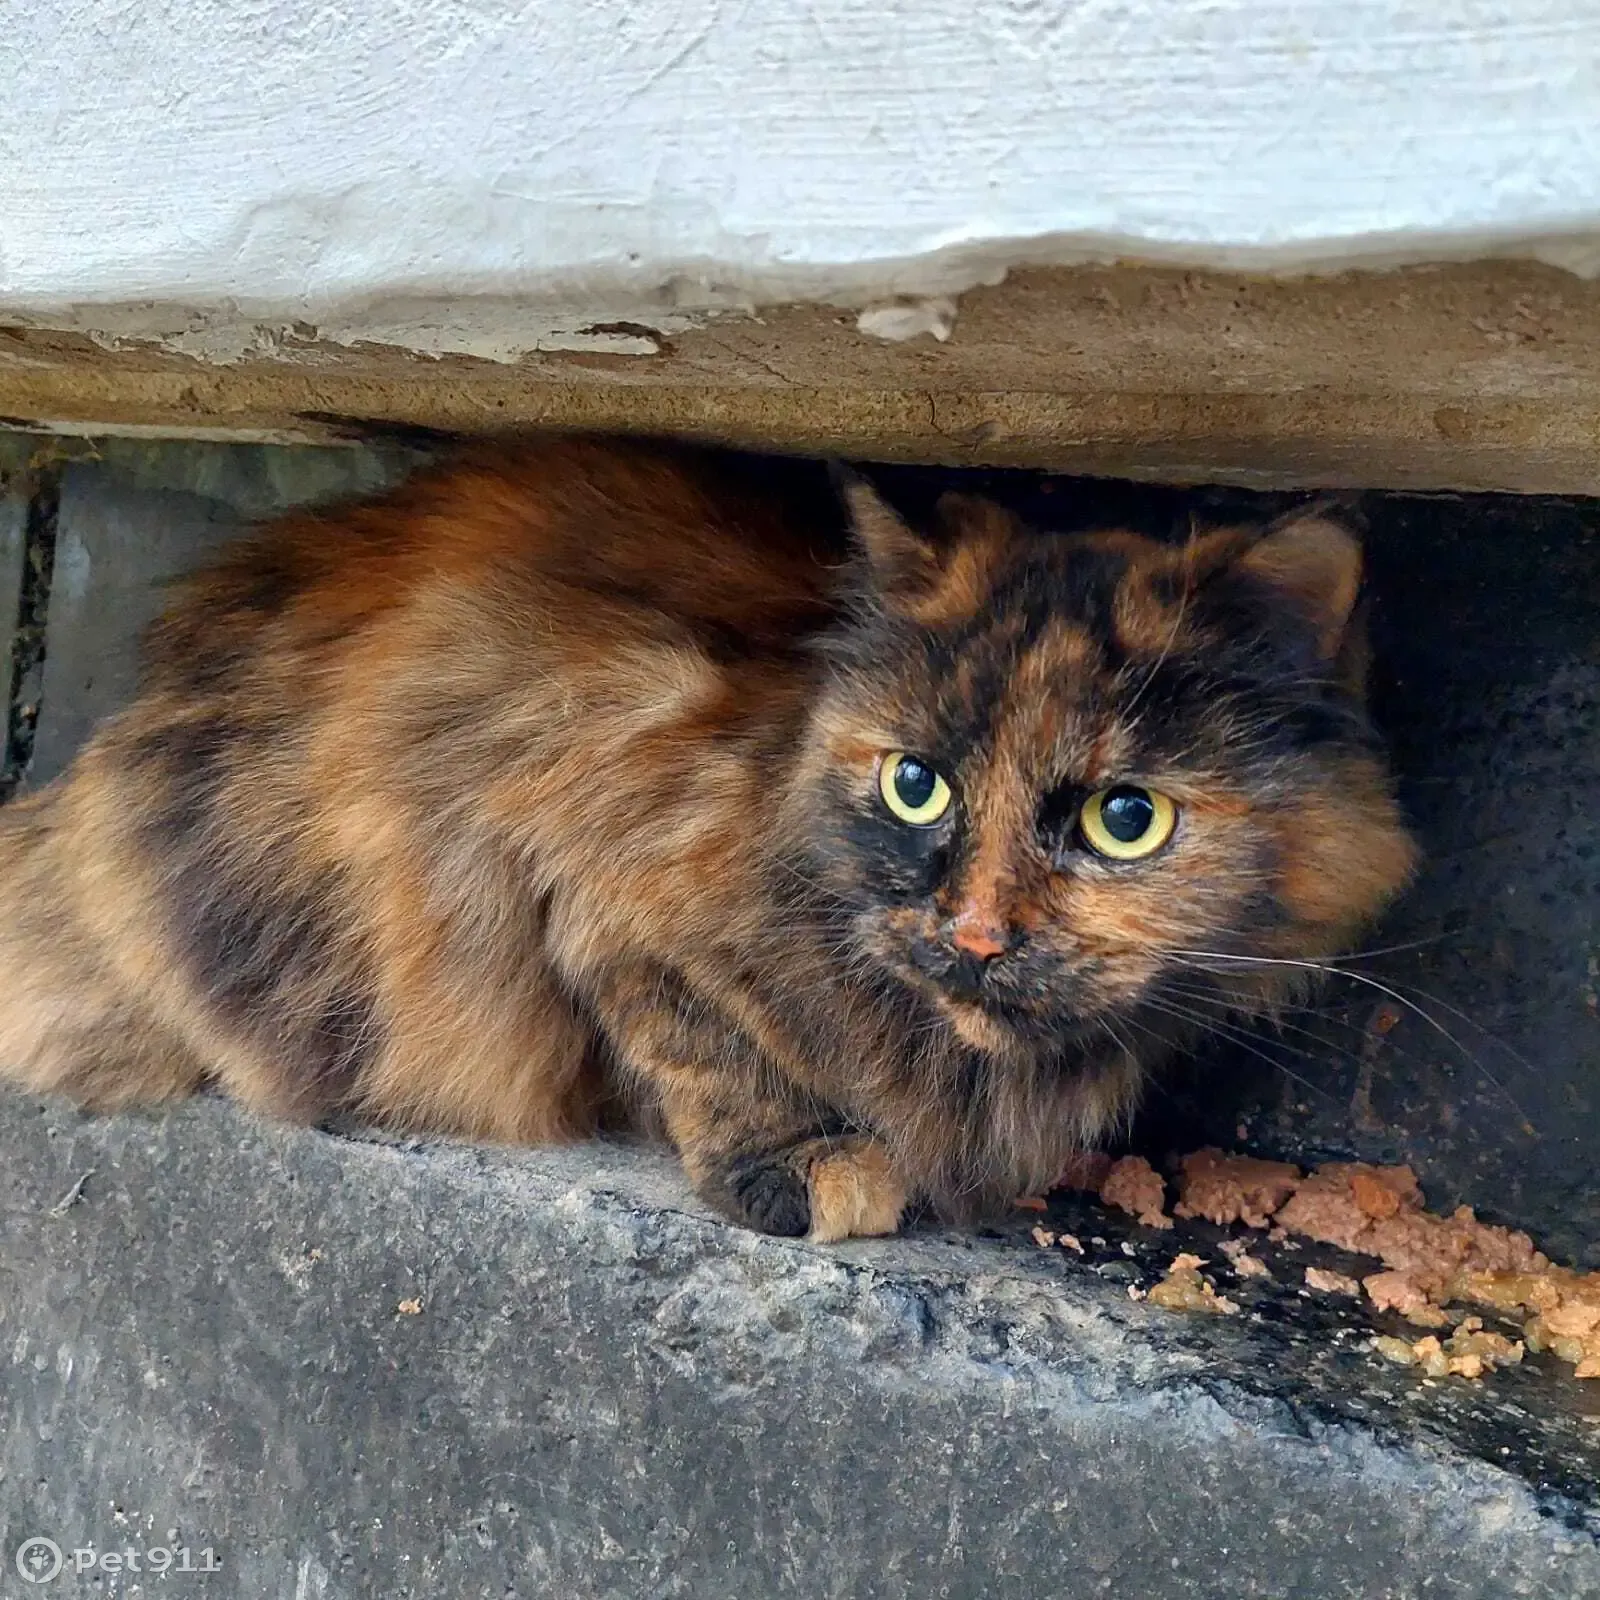 Найдена кошка Калико на ул. Рихарда Зорге, 14, СПб | Pet911.ru